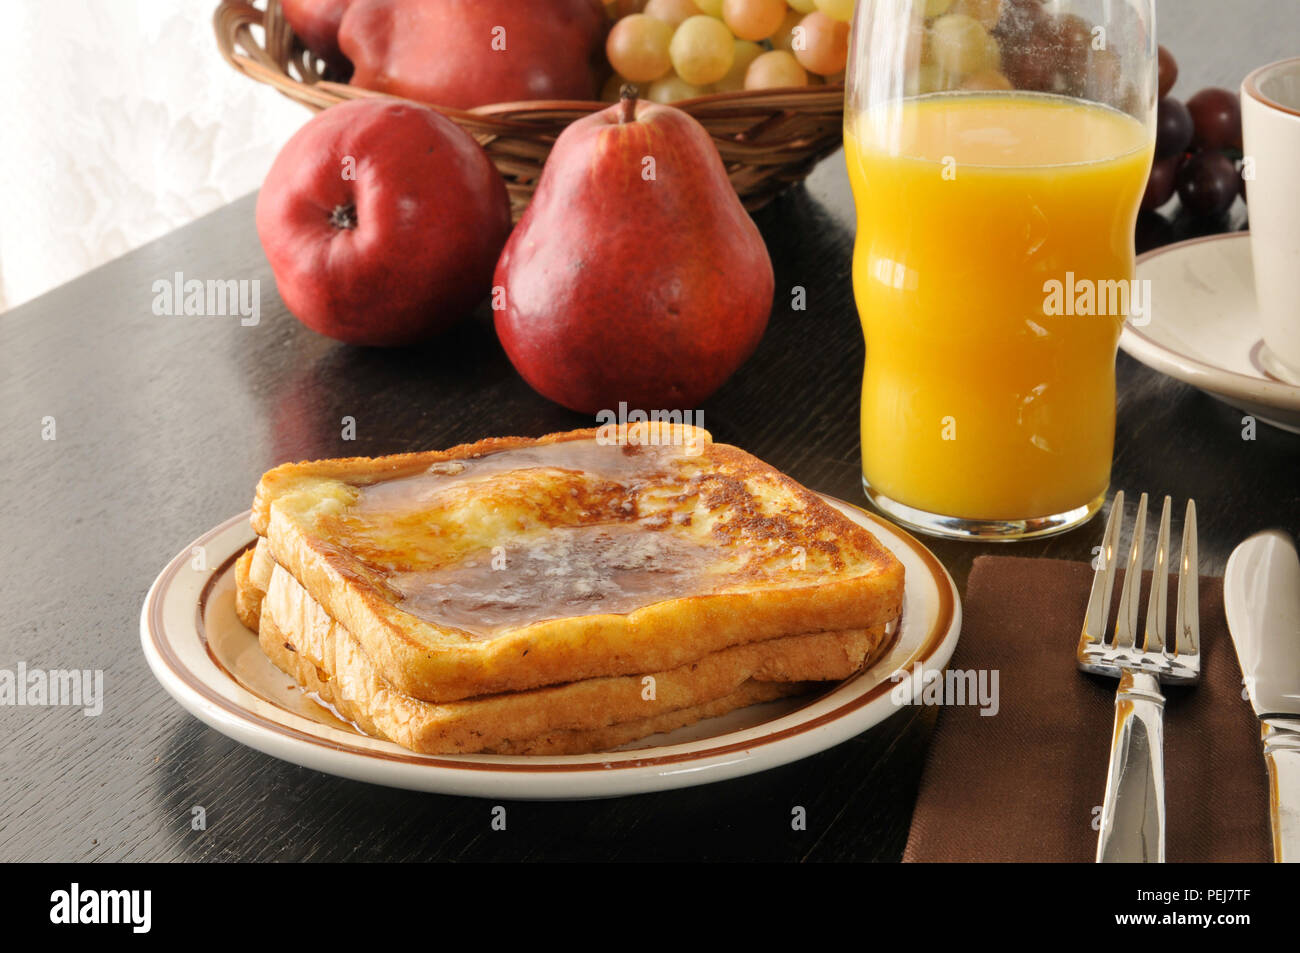 French Toast With A Basket Of Fruit And Orange Juice Stock Photo Alamy